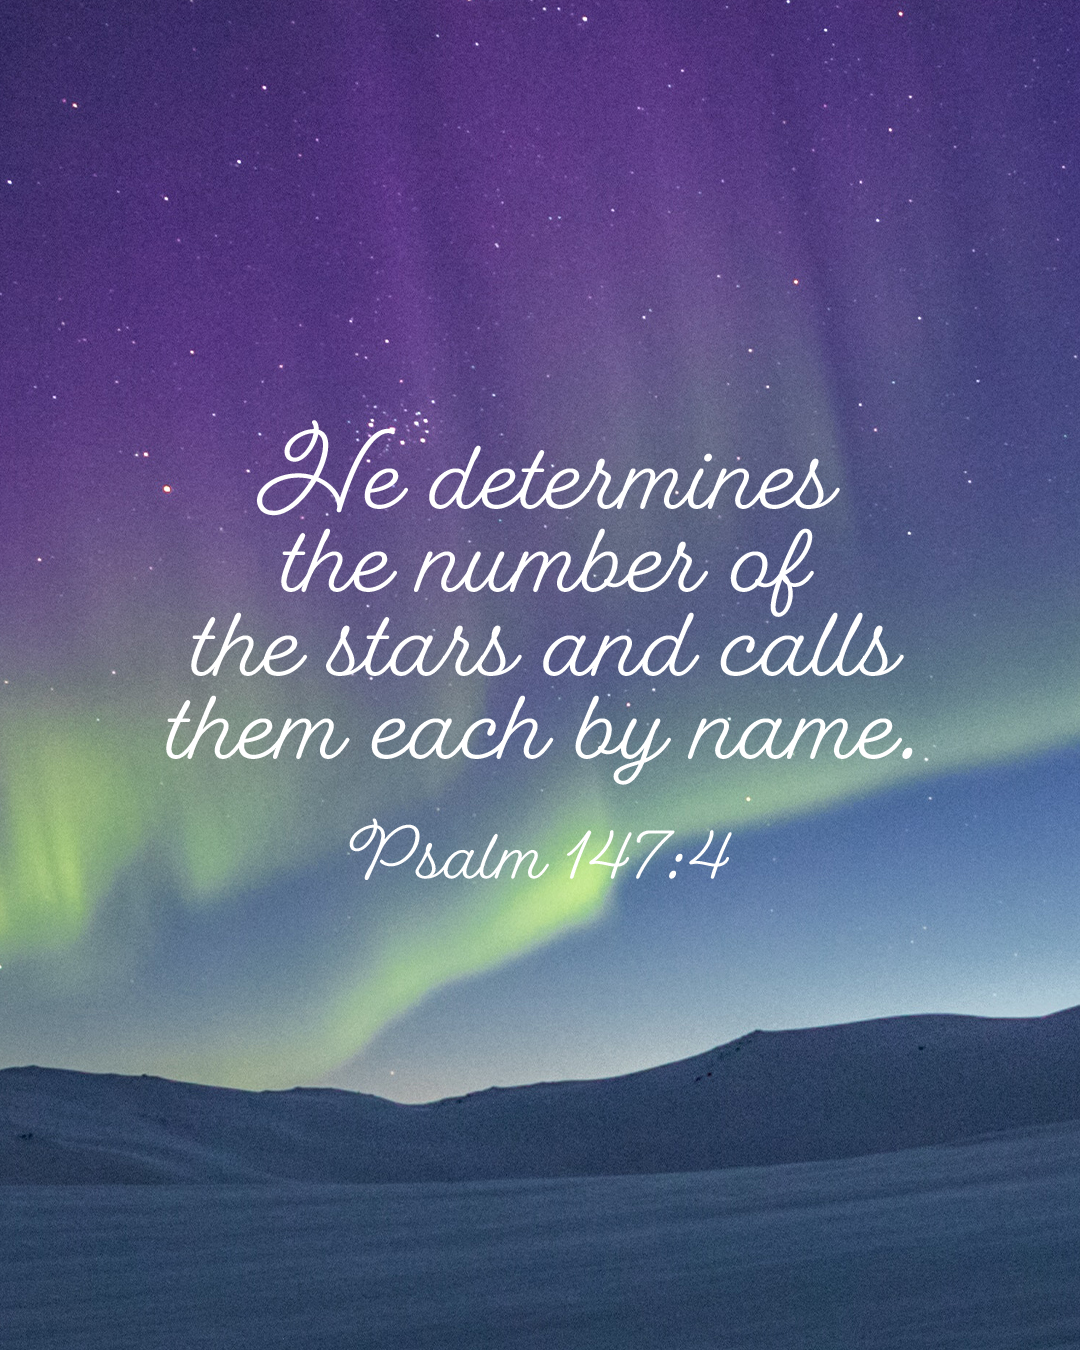 Psalm 147:4